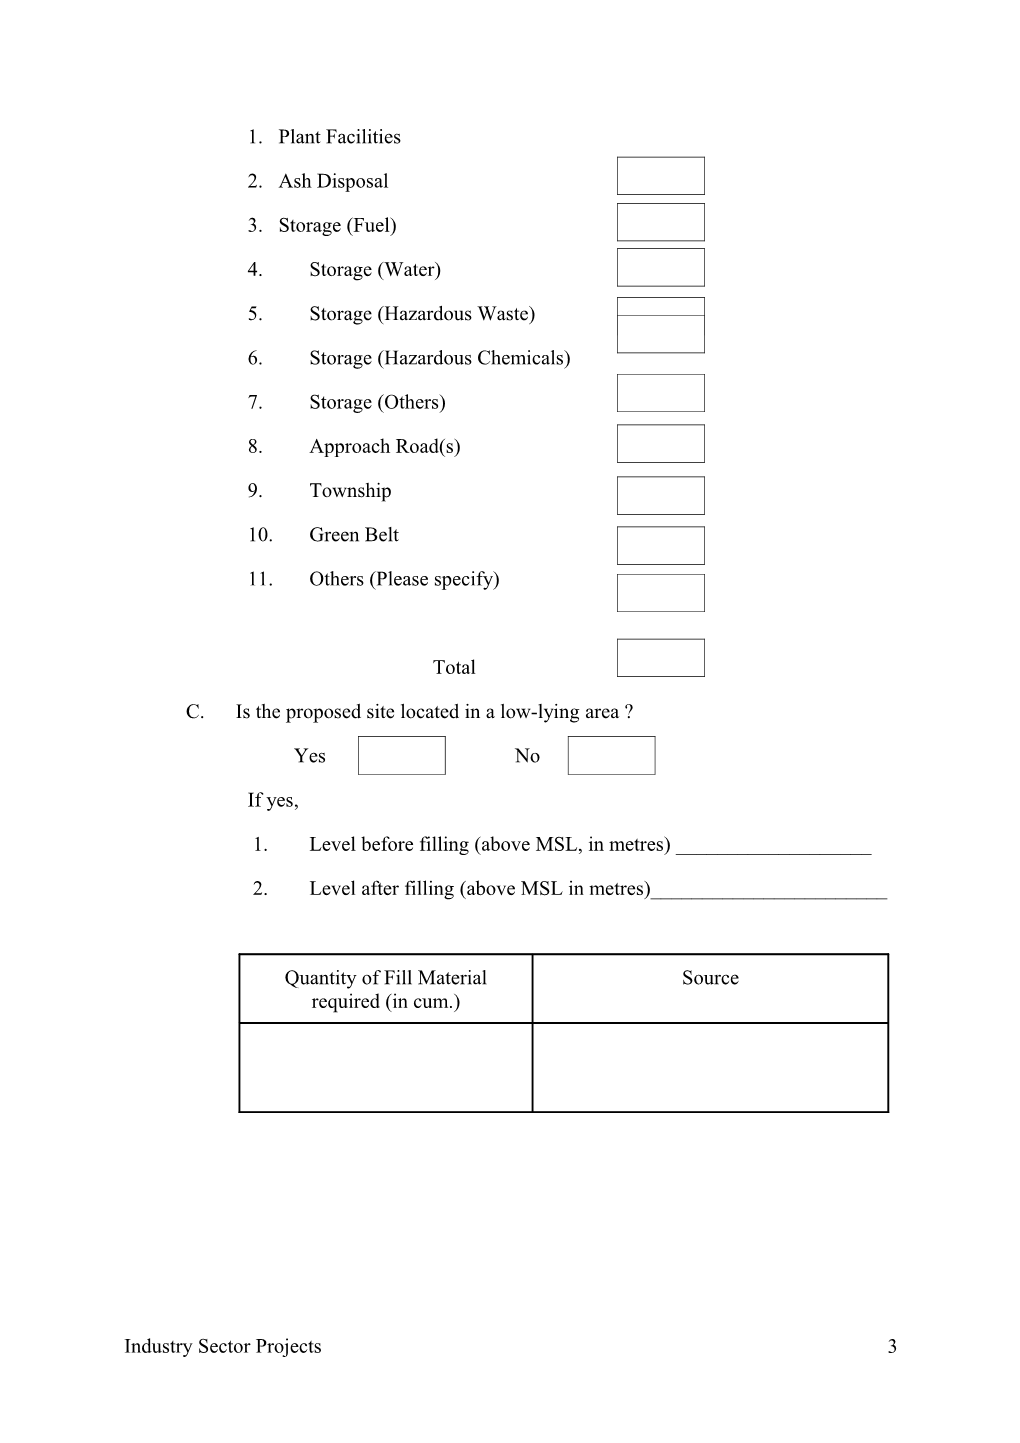 Questionnaire for Environmental Appraisal